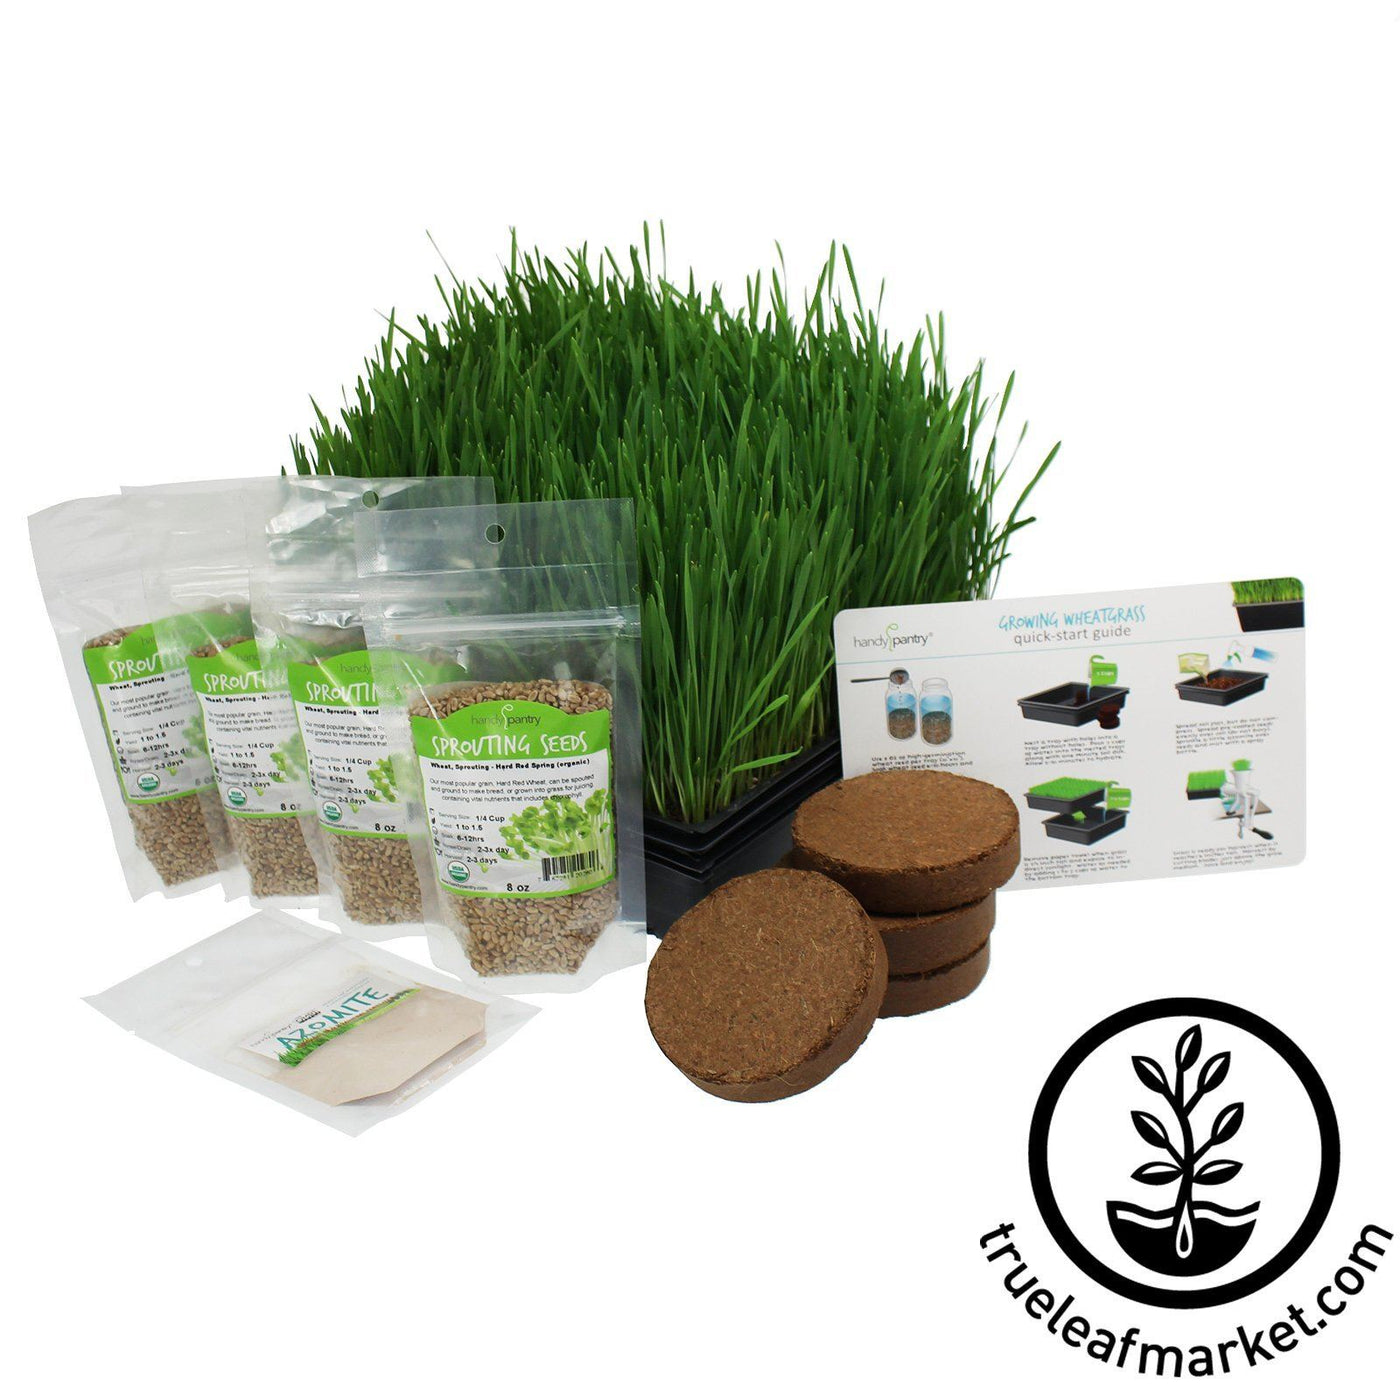 Starter Organic Wheatgrass Growing Kit - Learn to Grow Wheat Grass $24